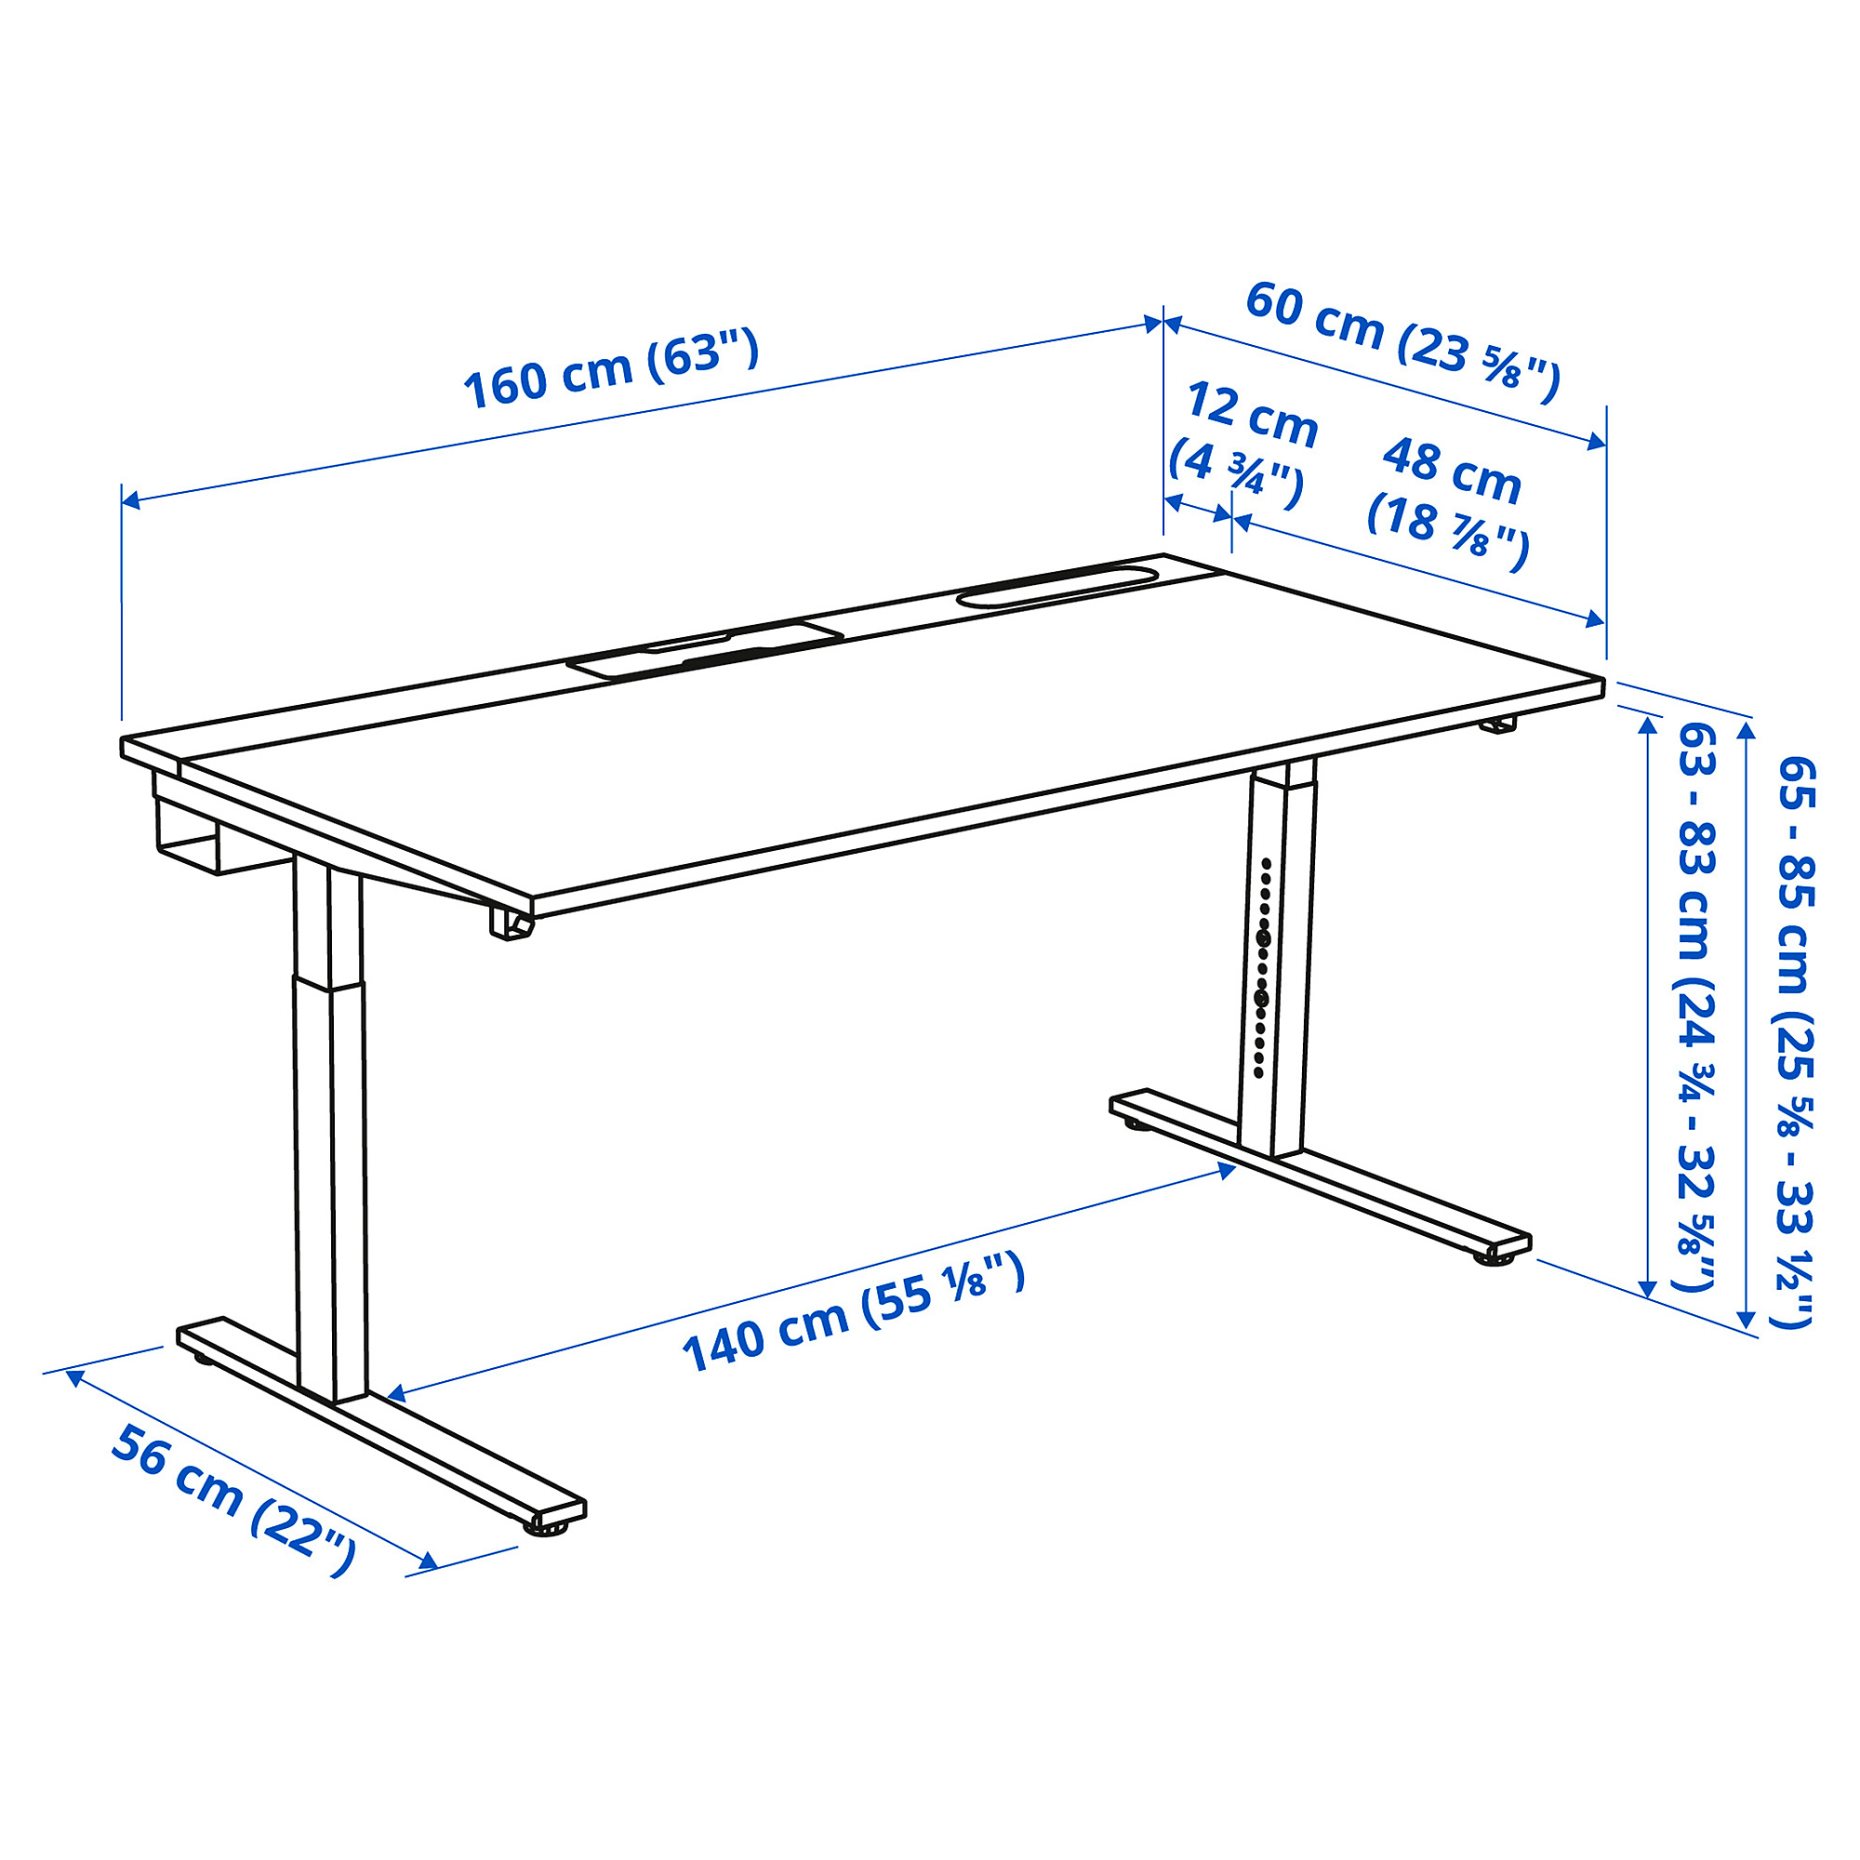 MITTZON, desk, 160x60 cm, 095.290.54